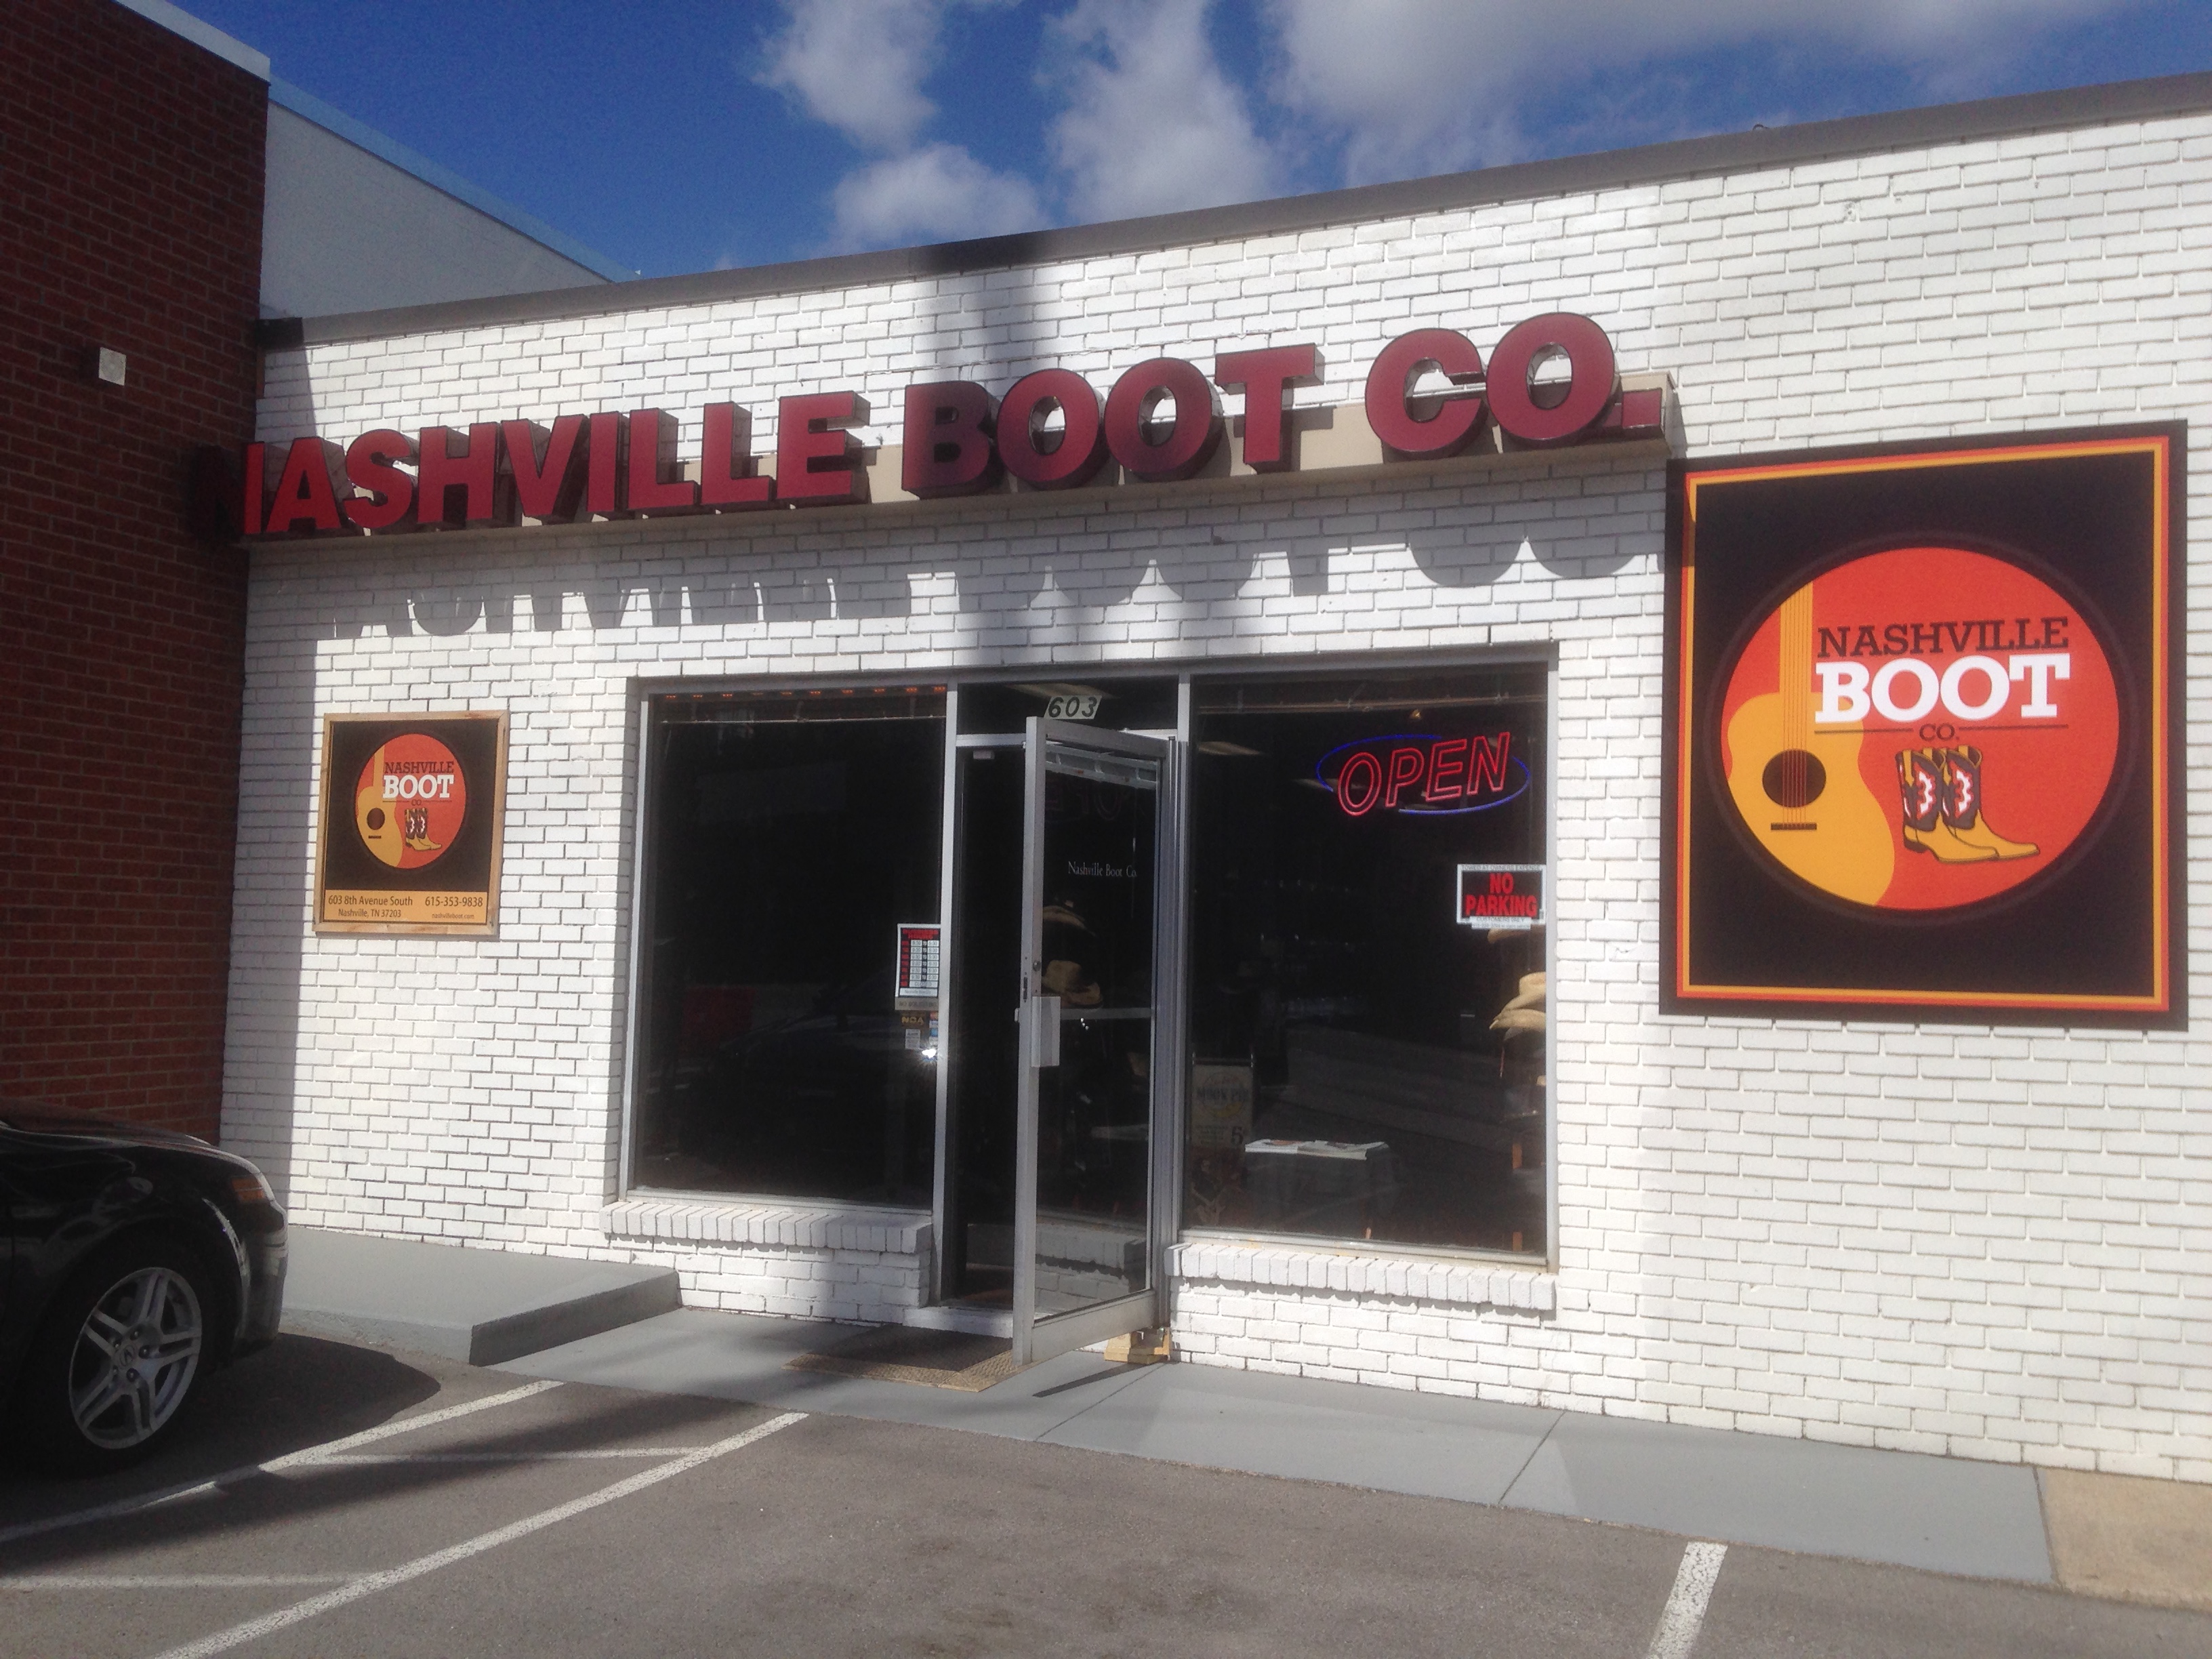 Nashville Boot Co. Store